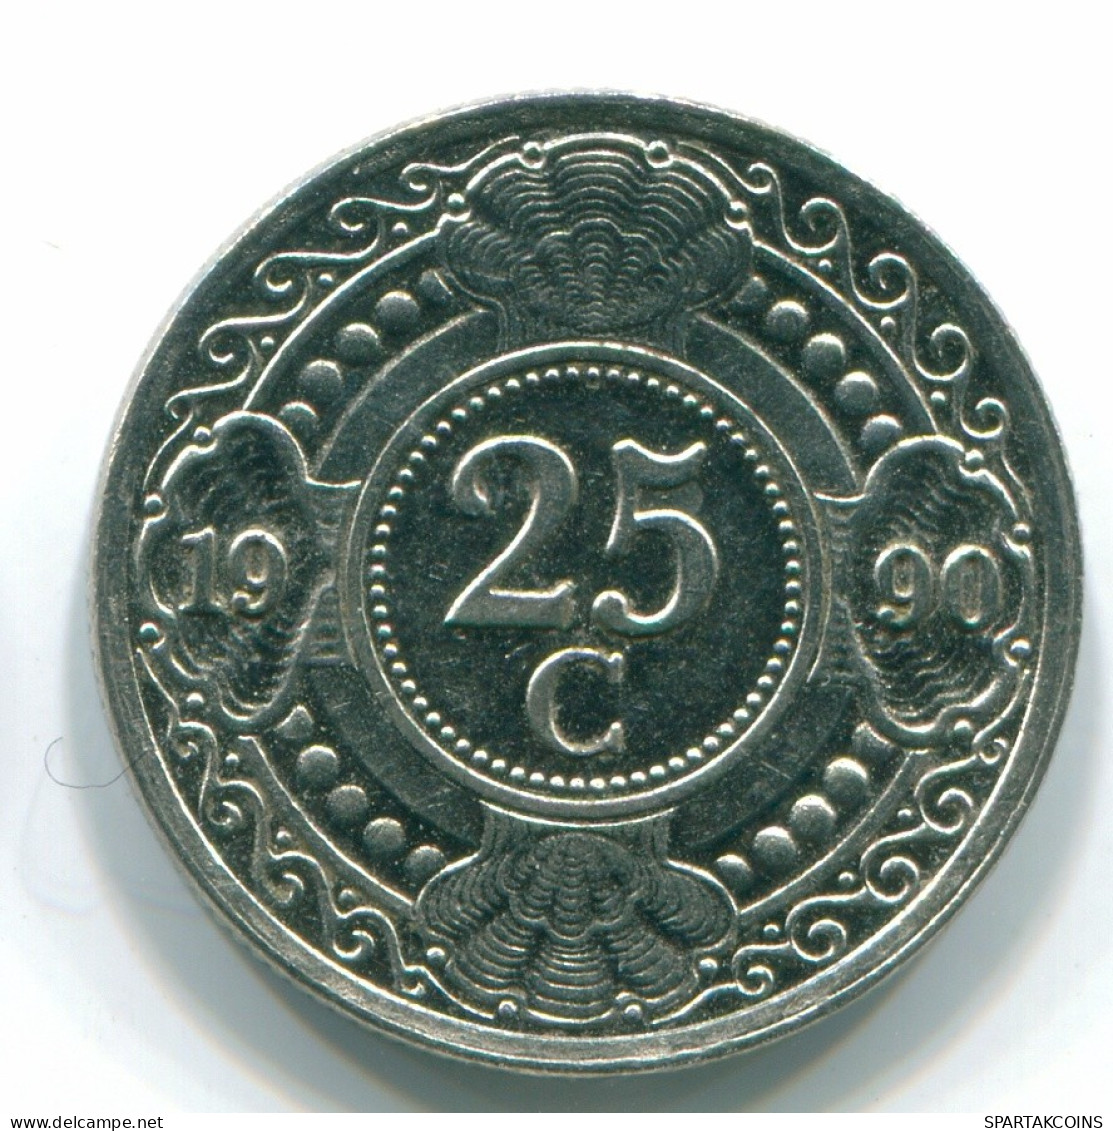 25 CENTS 1990 NETHERLANDS ANTILLES Nickel Colonial Coin #S11259.U.A - Antilles Néerlandaises